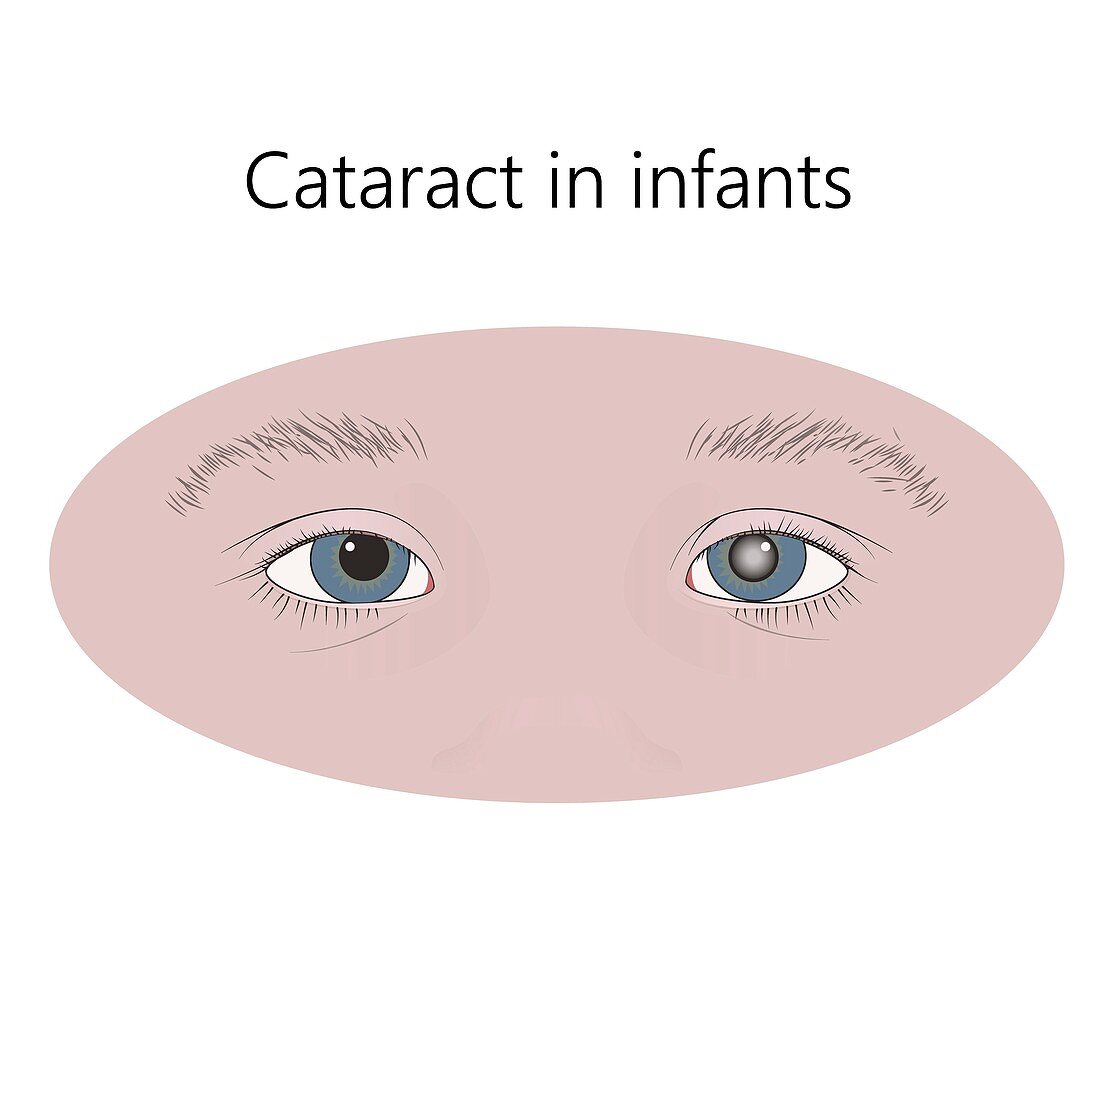 Childhood cataract, illustration